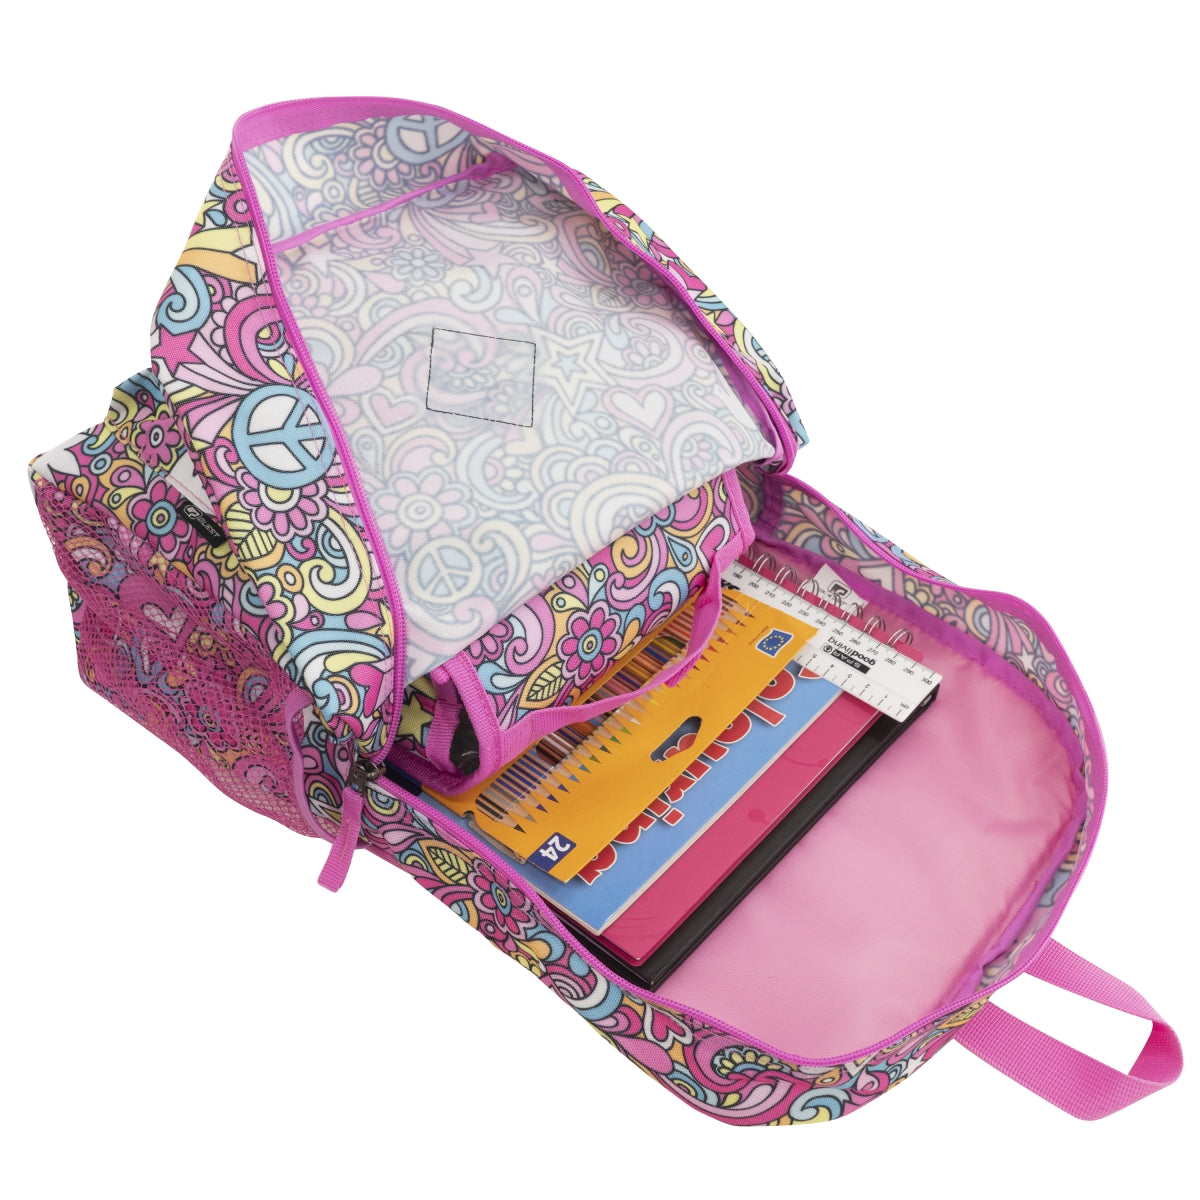 Quest Hippie 4 Piece BTS Backpack Combo - Pink